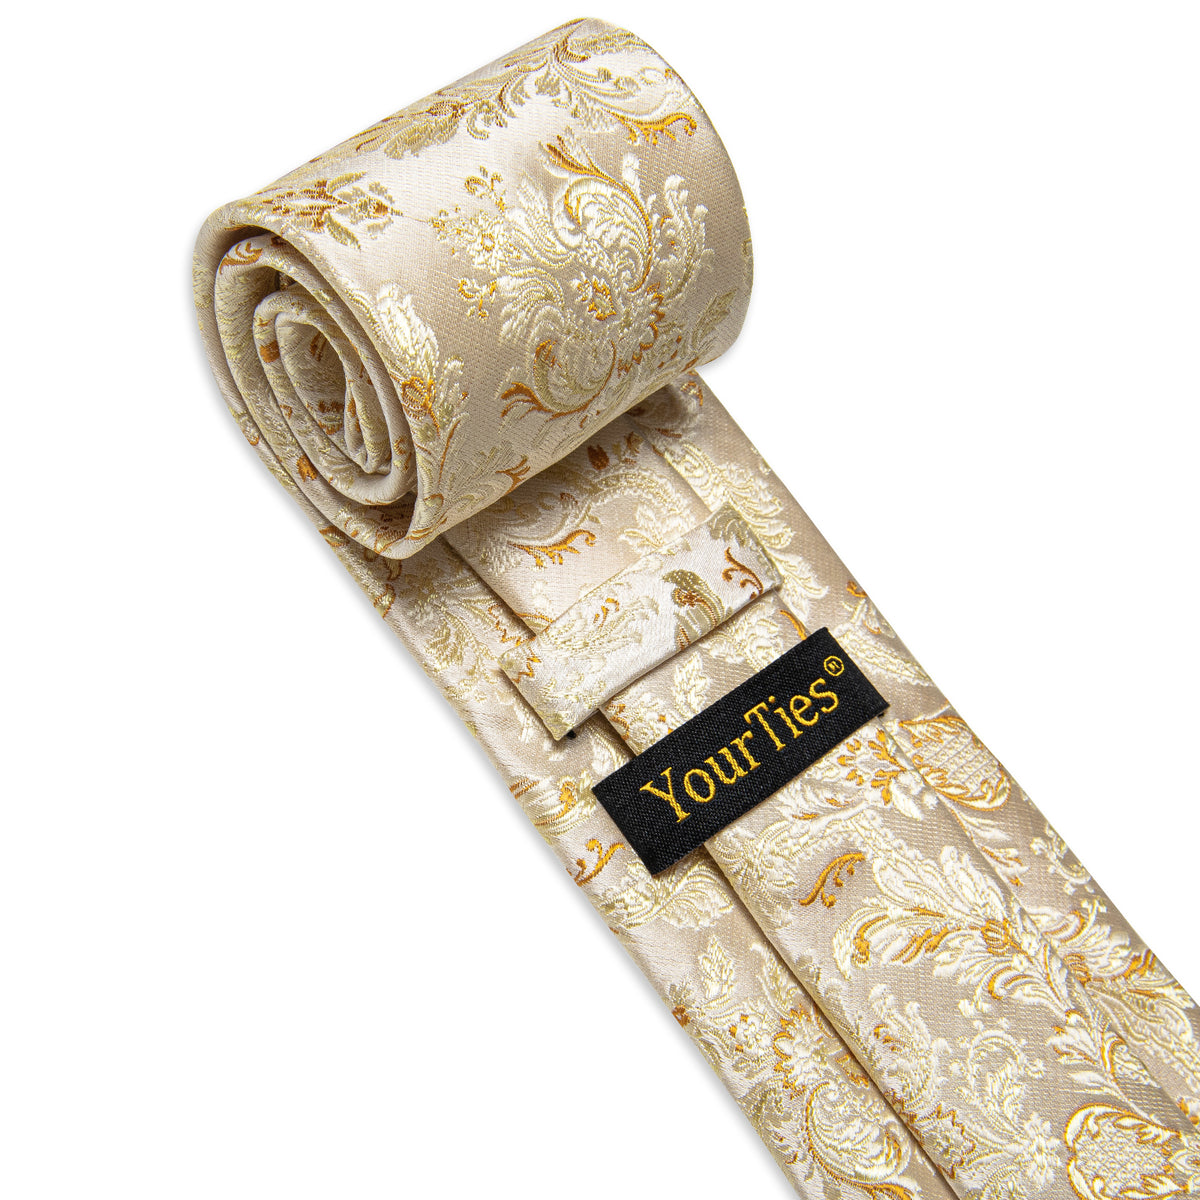 Light Yellow Gold Floral Men's Necktie Pocket Square Cufflinks Set